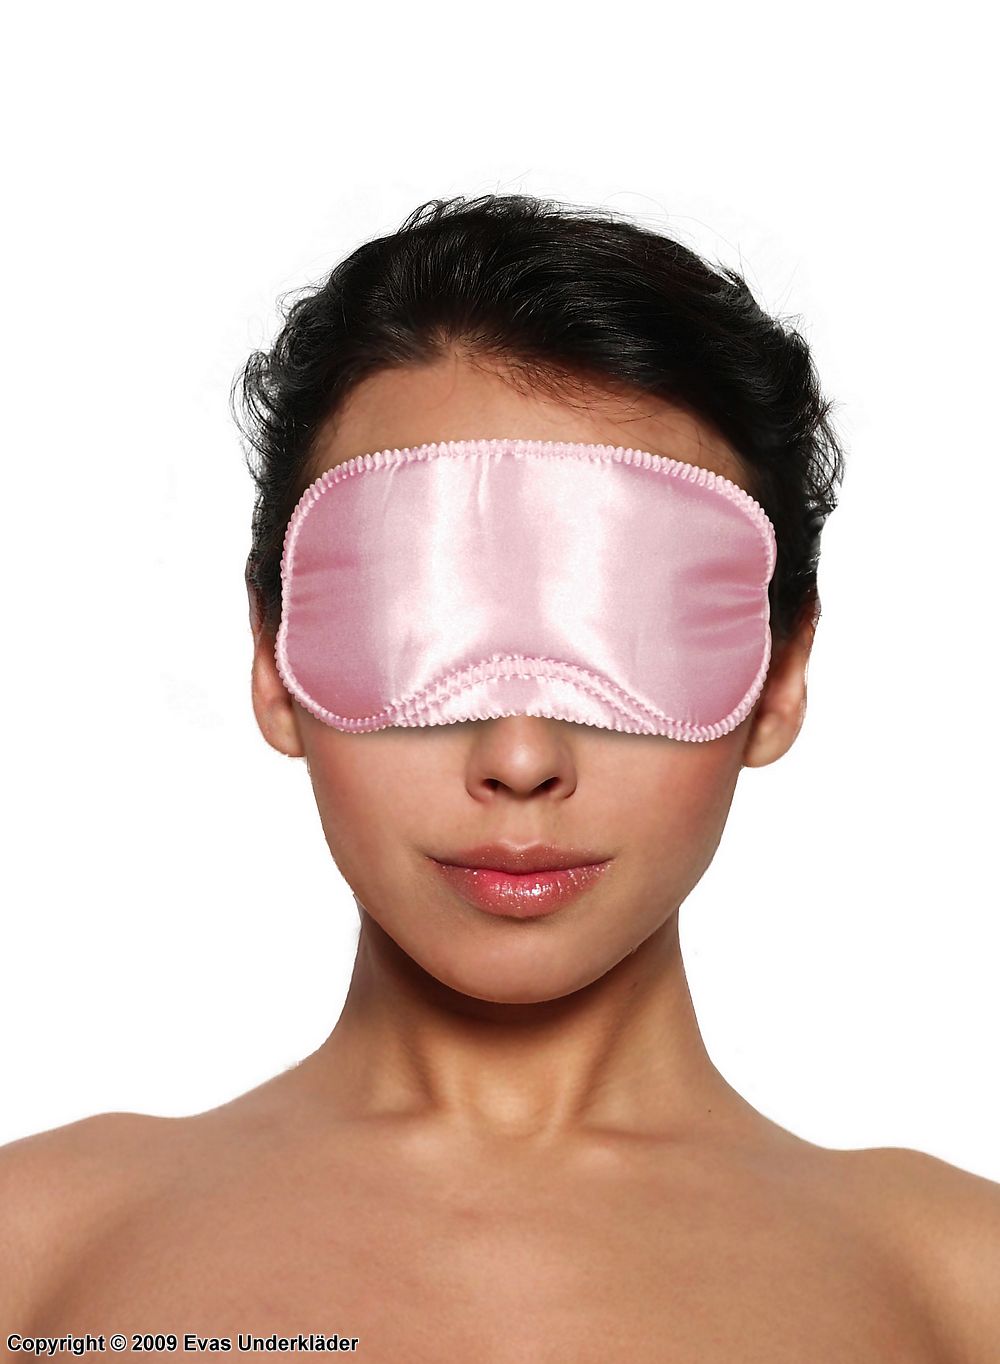 Sleep mask in pink